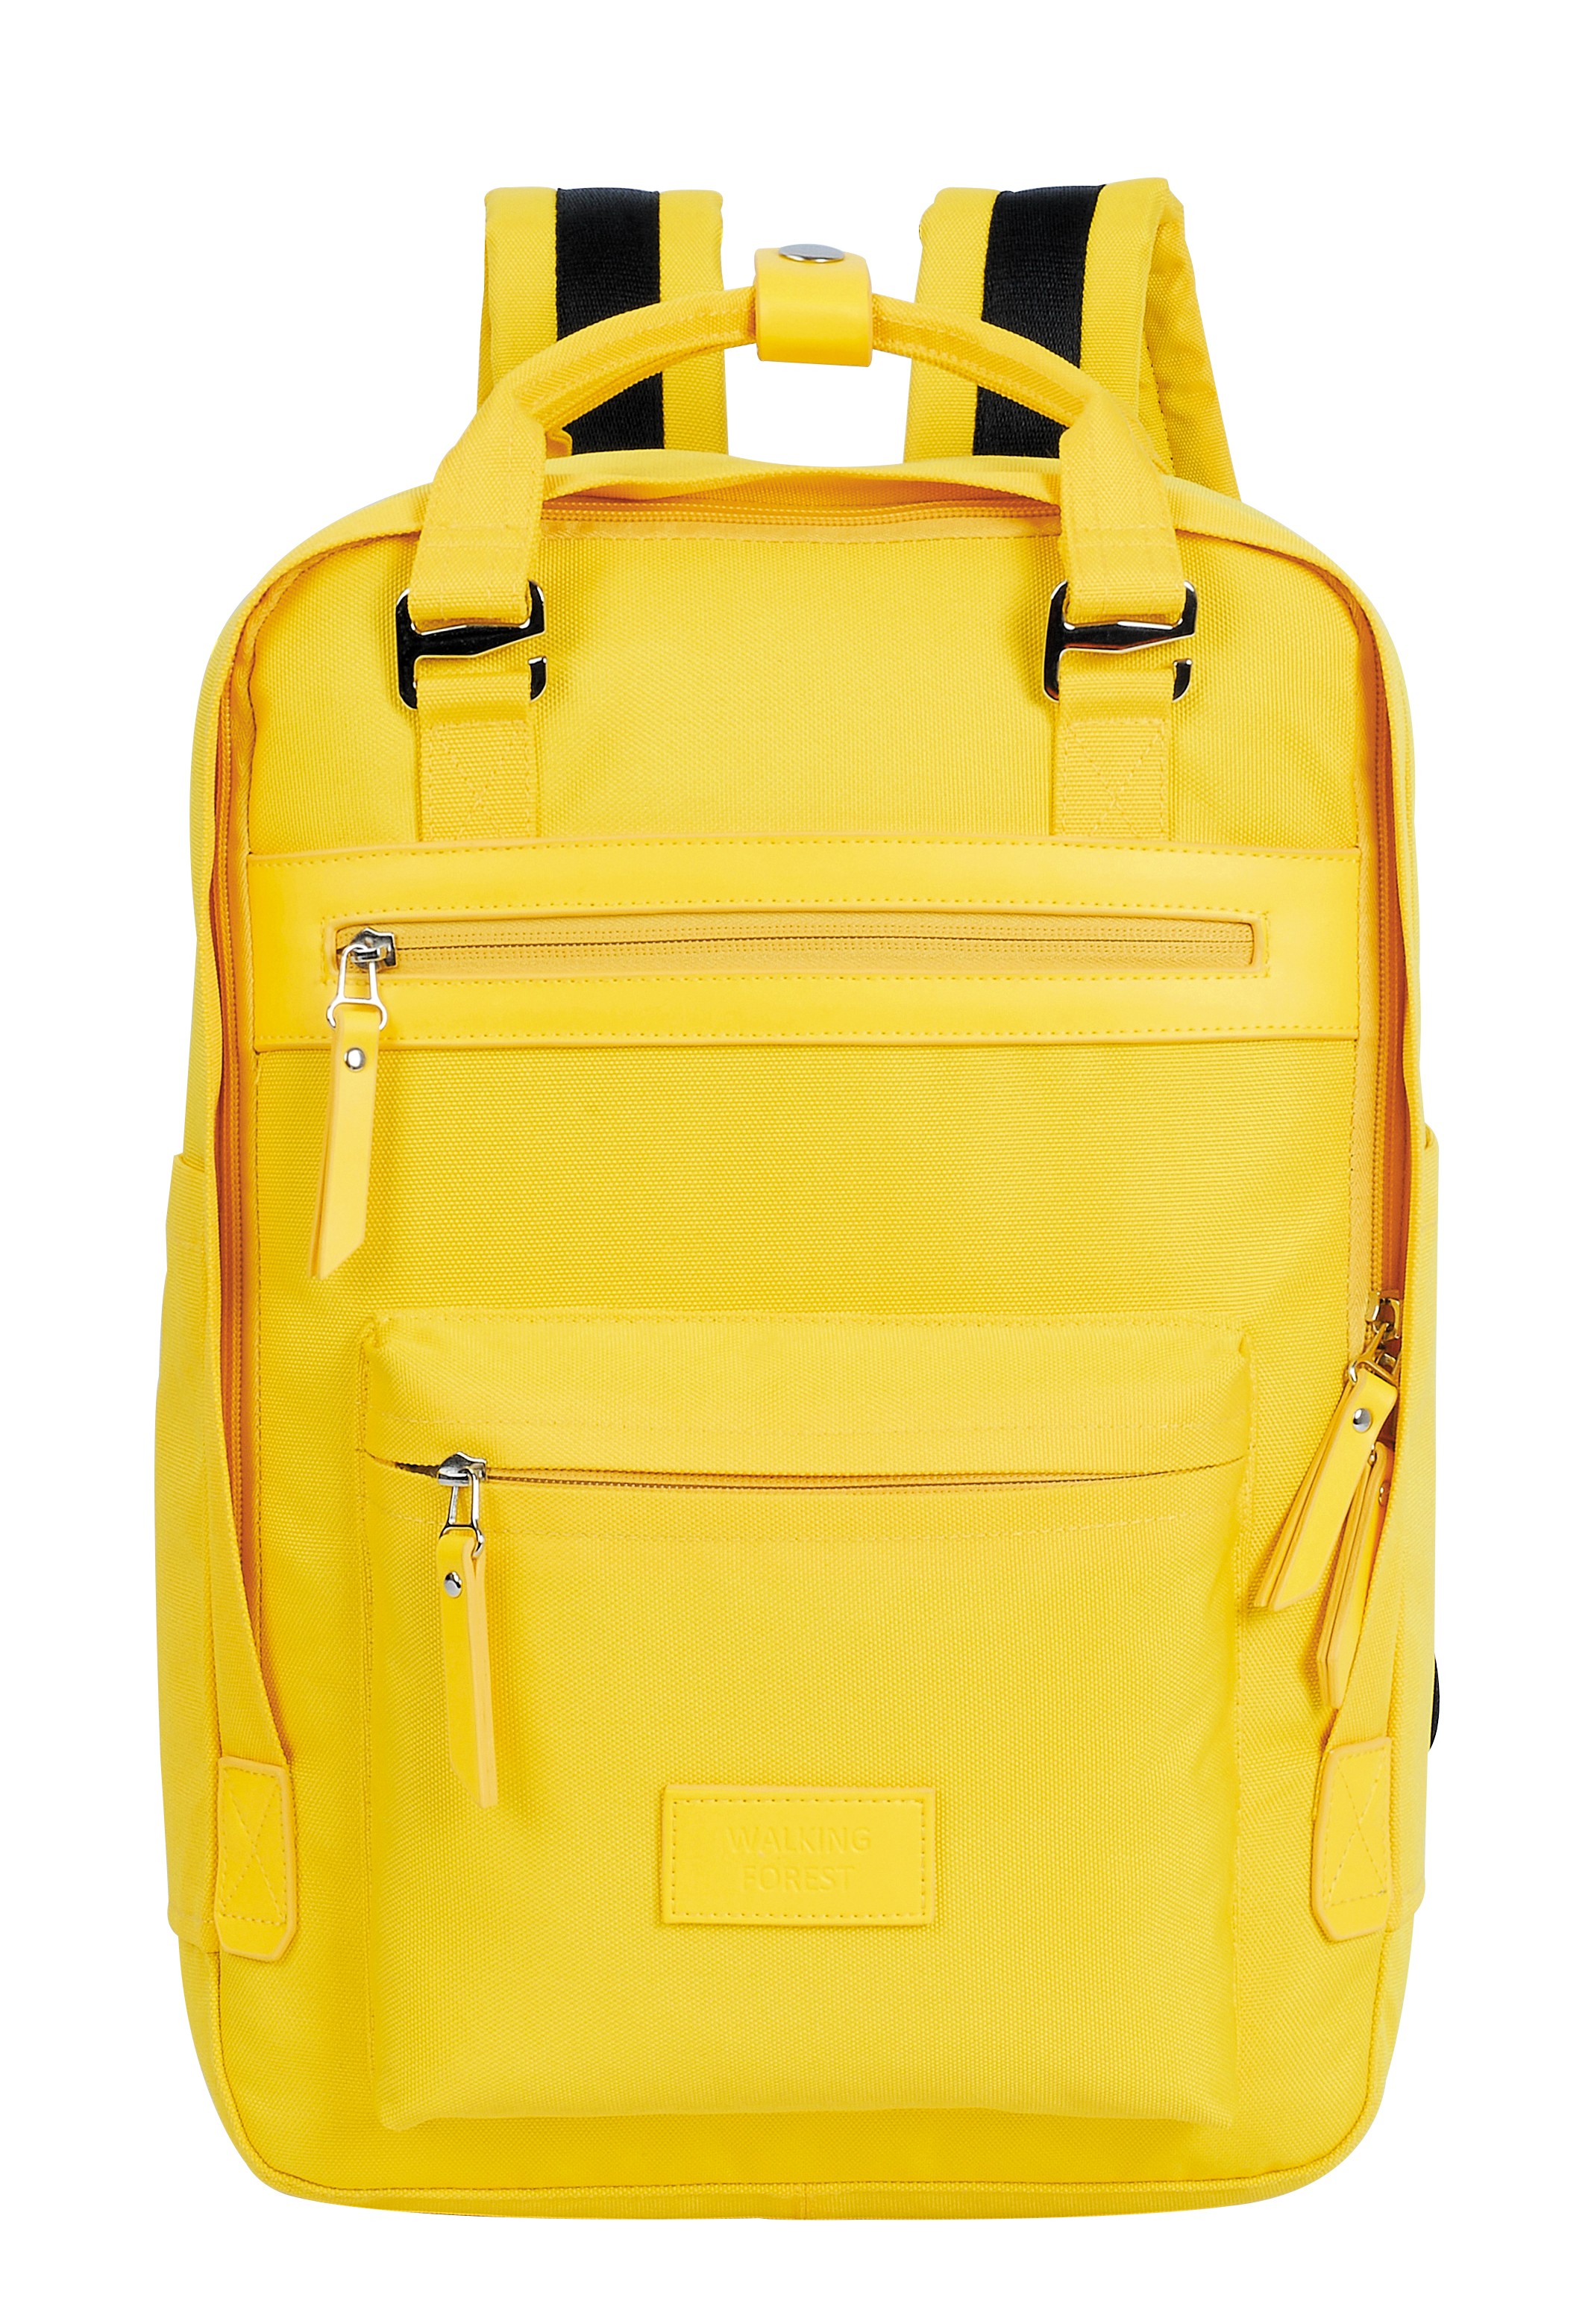 Желтый портфель. Рюкзак желтый. Эстетика спортивный рюкзак желтый. Anneke Mochila Backpack.